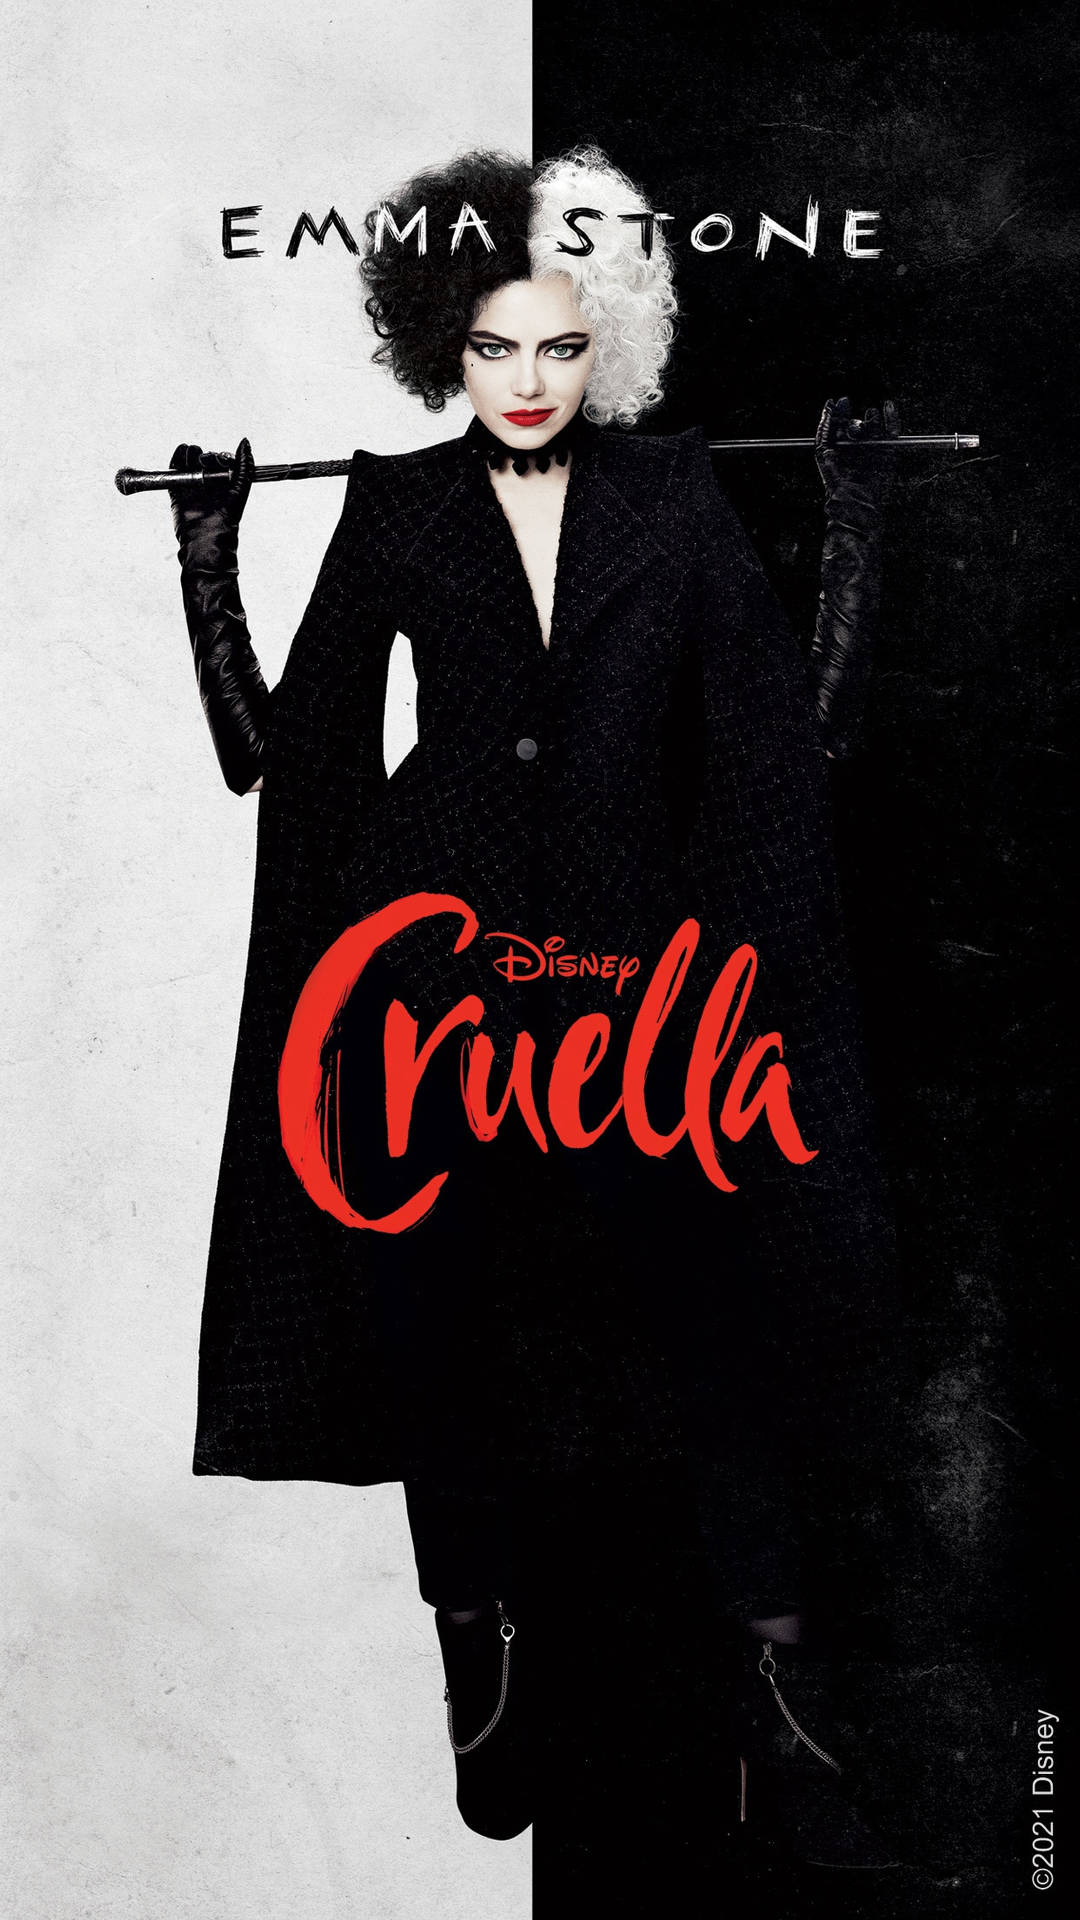 Emma Stone As Disney's Cruella 2021 Background